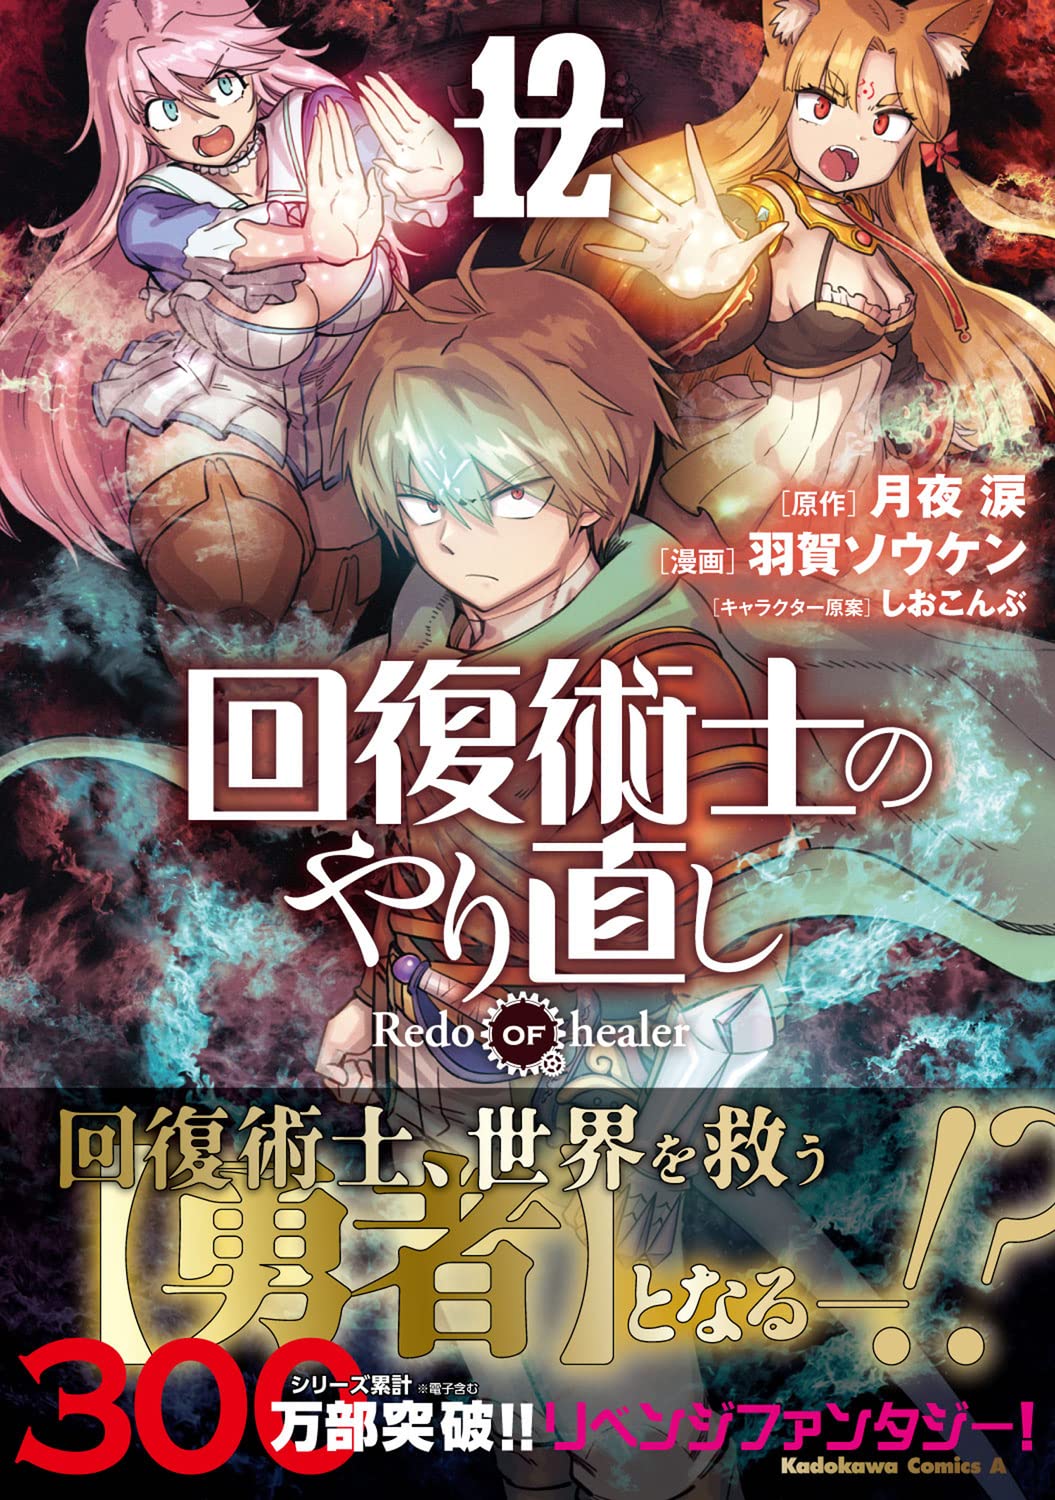 Petition · Get Redo Of Healer English dub Manga and Light Novel! ·